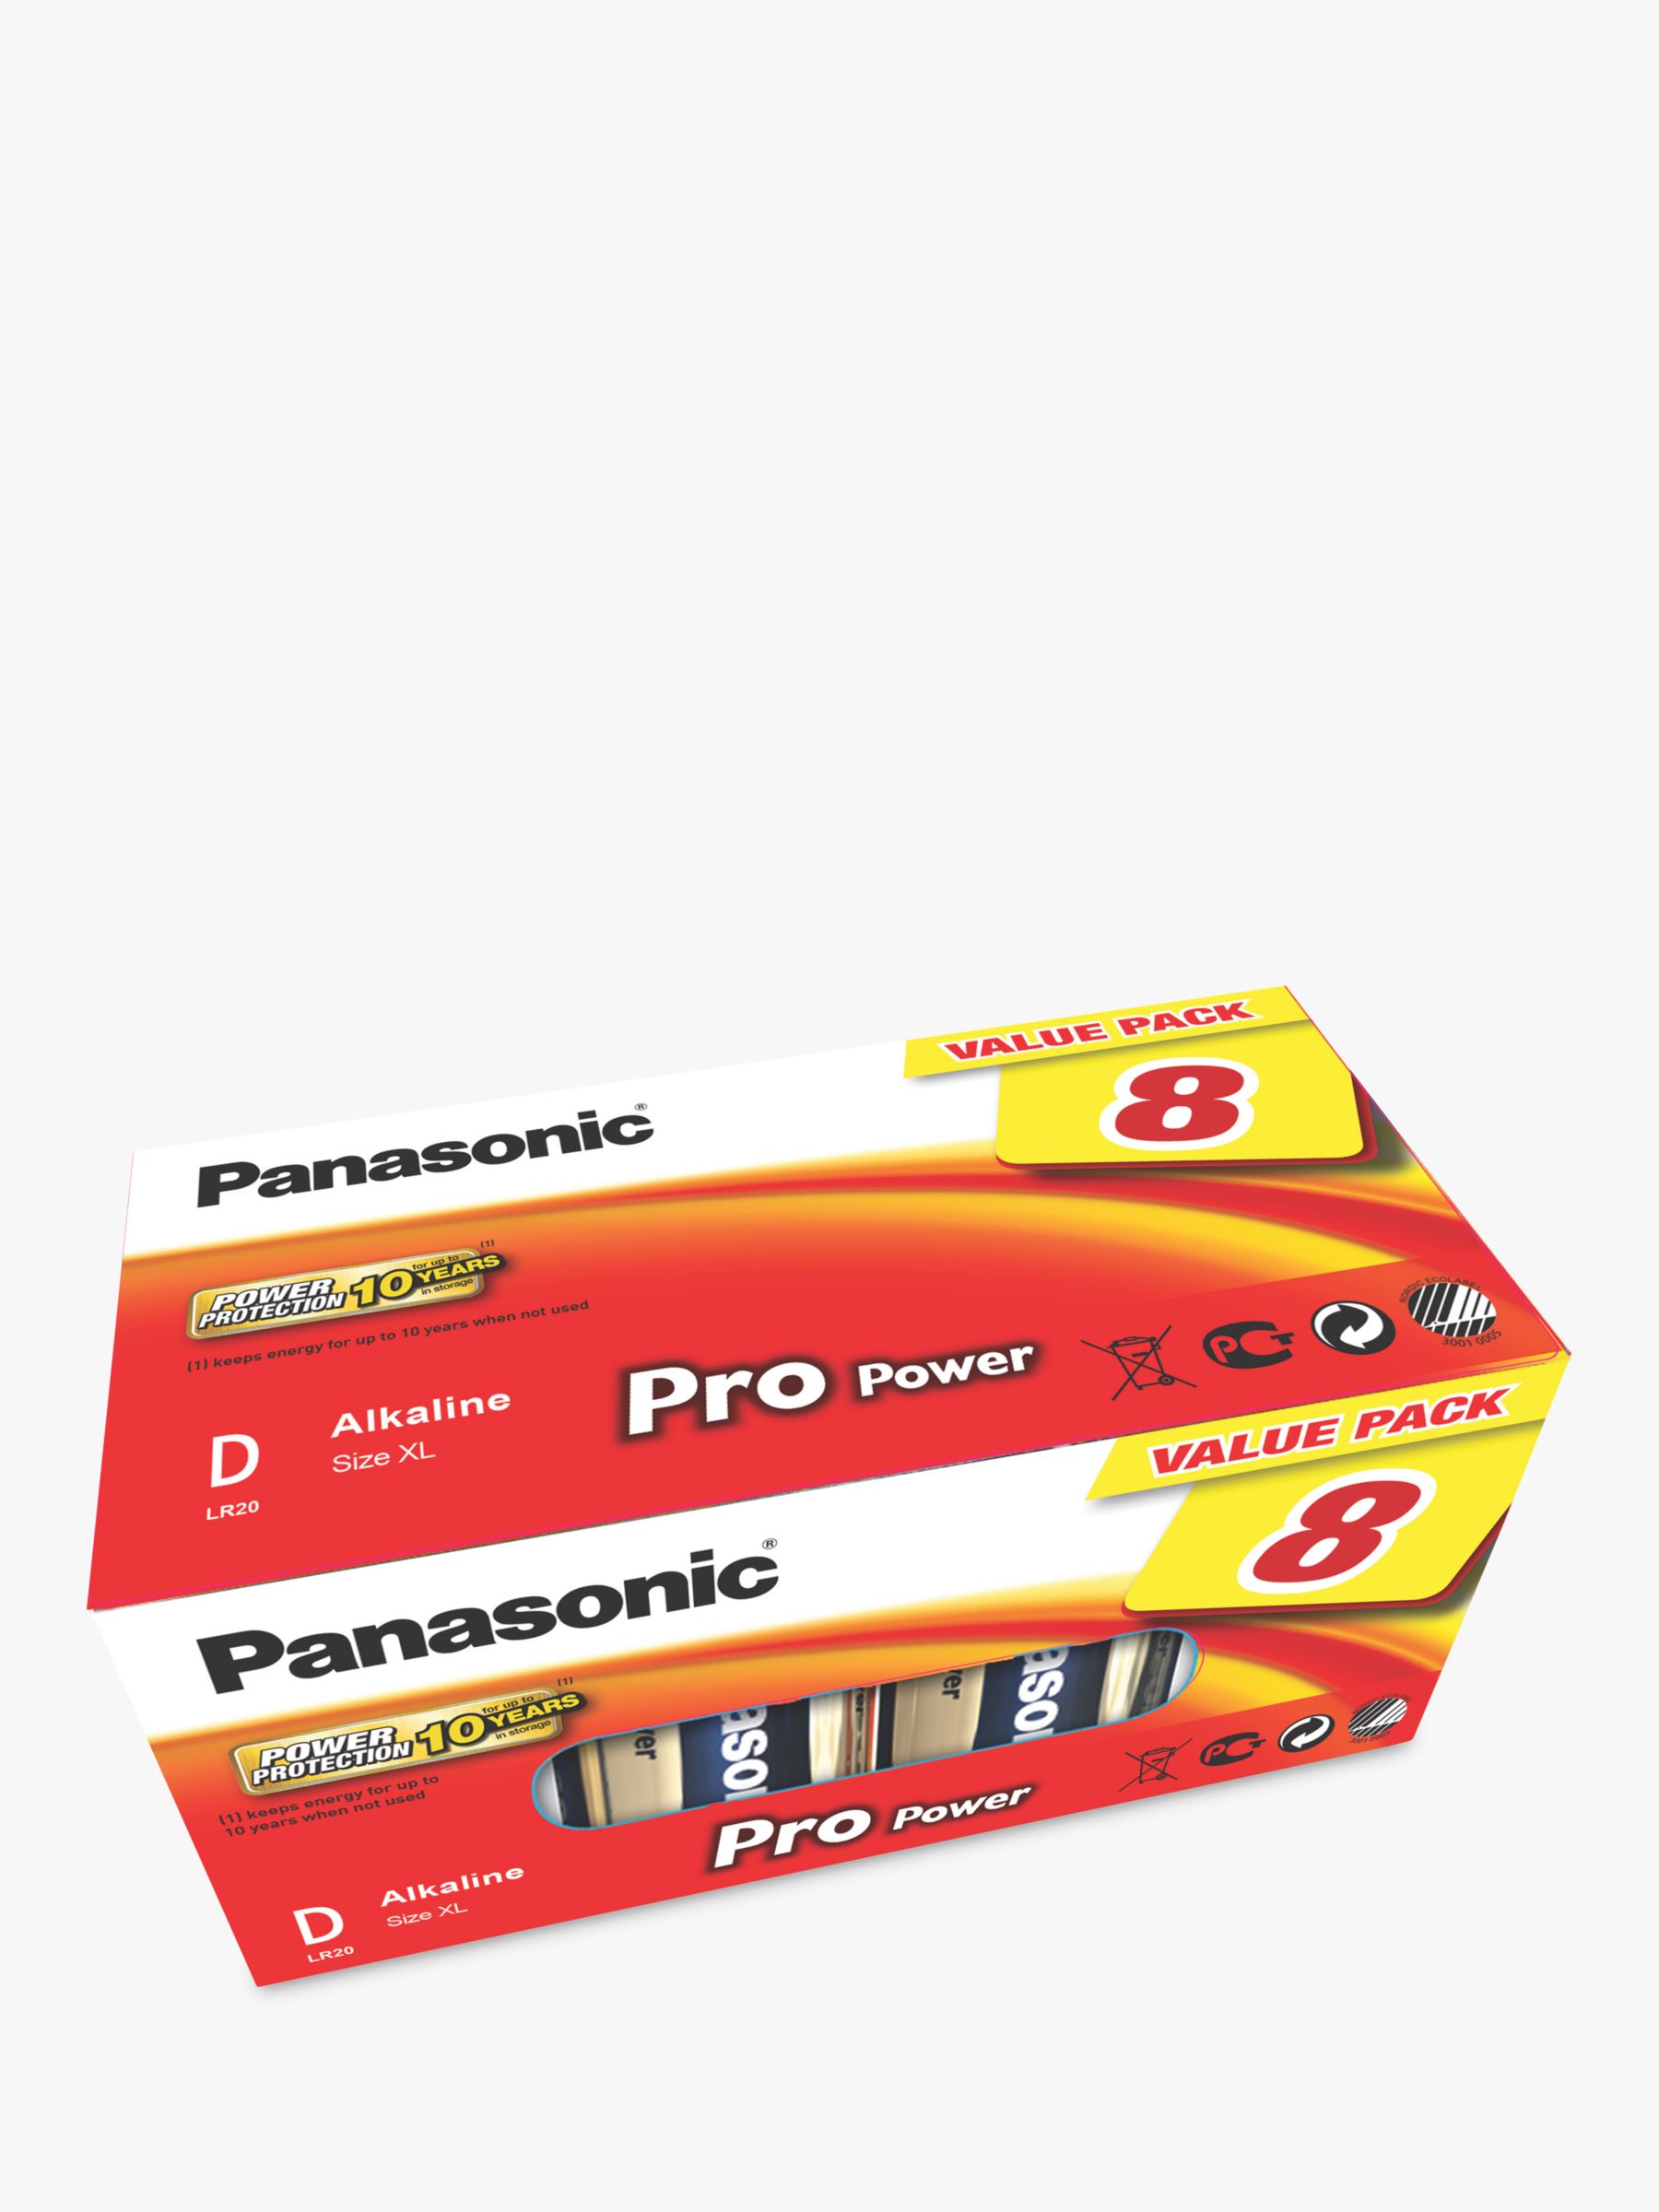 Panasonic Pro Power LR20 Alkaline D Battery, Pack of 8